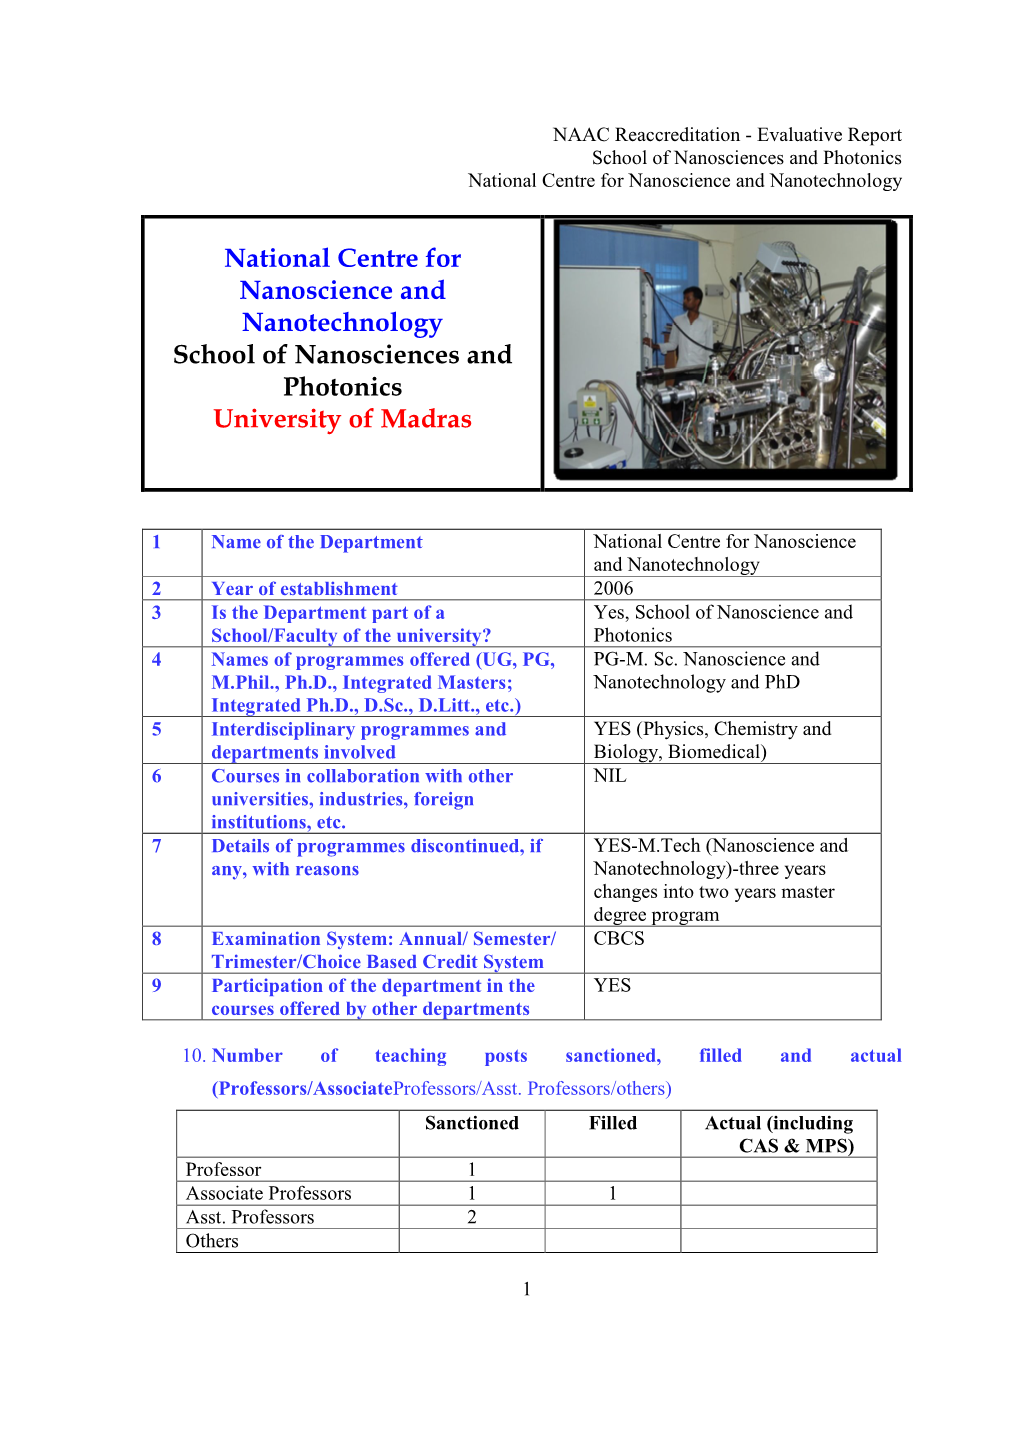 National Centre for Nanoscience and Nanotechnology School of Nanosciences and Photonics University of Madras